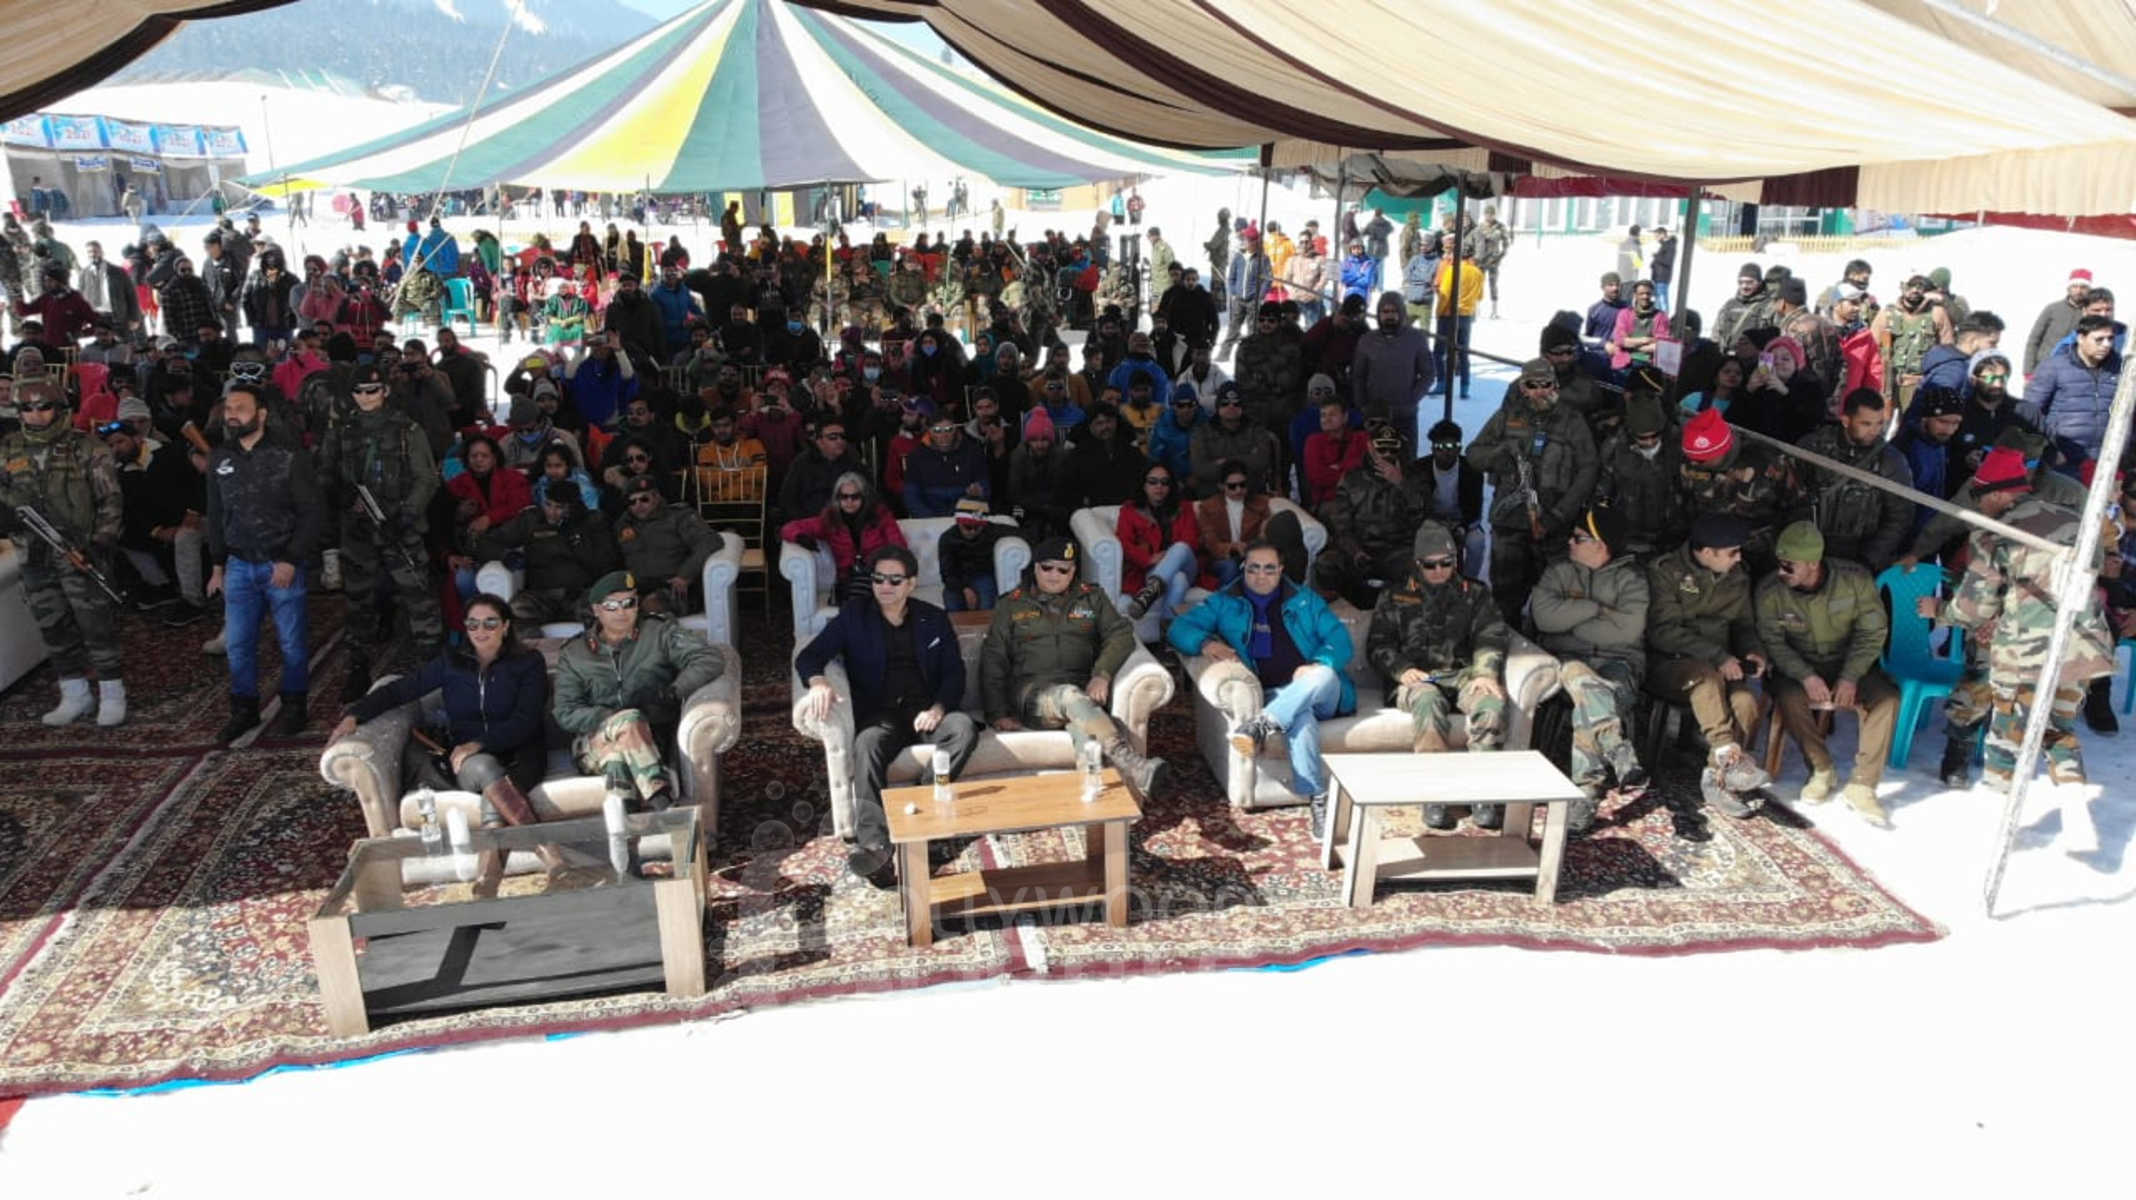 Vidya balan arbaaz khan kashmir gulmarg winter festival